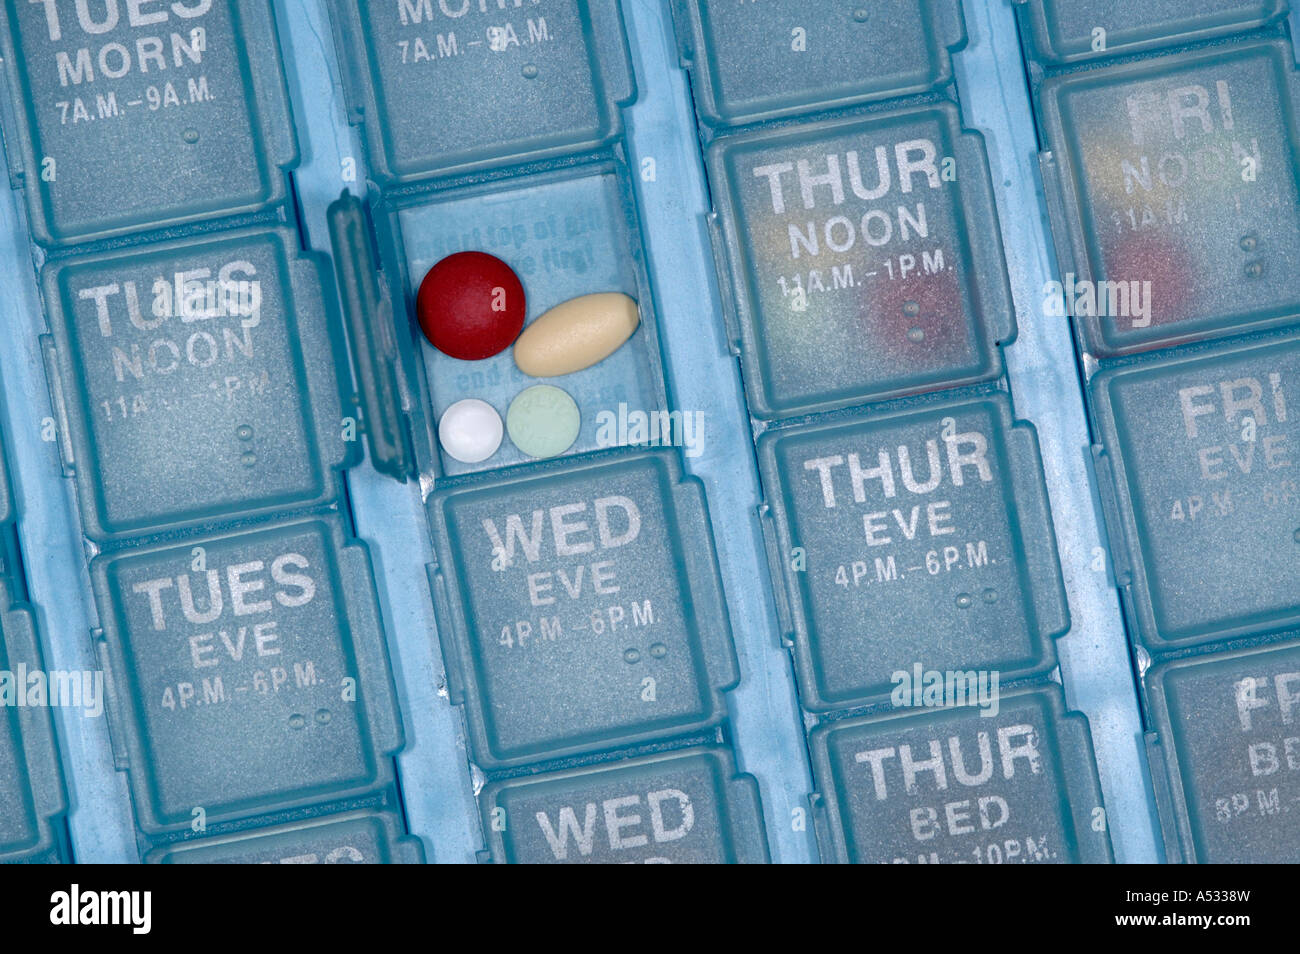 An elderly senior citizen person's daily weekly pill organizer Stock Photo